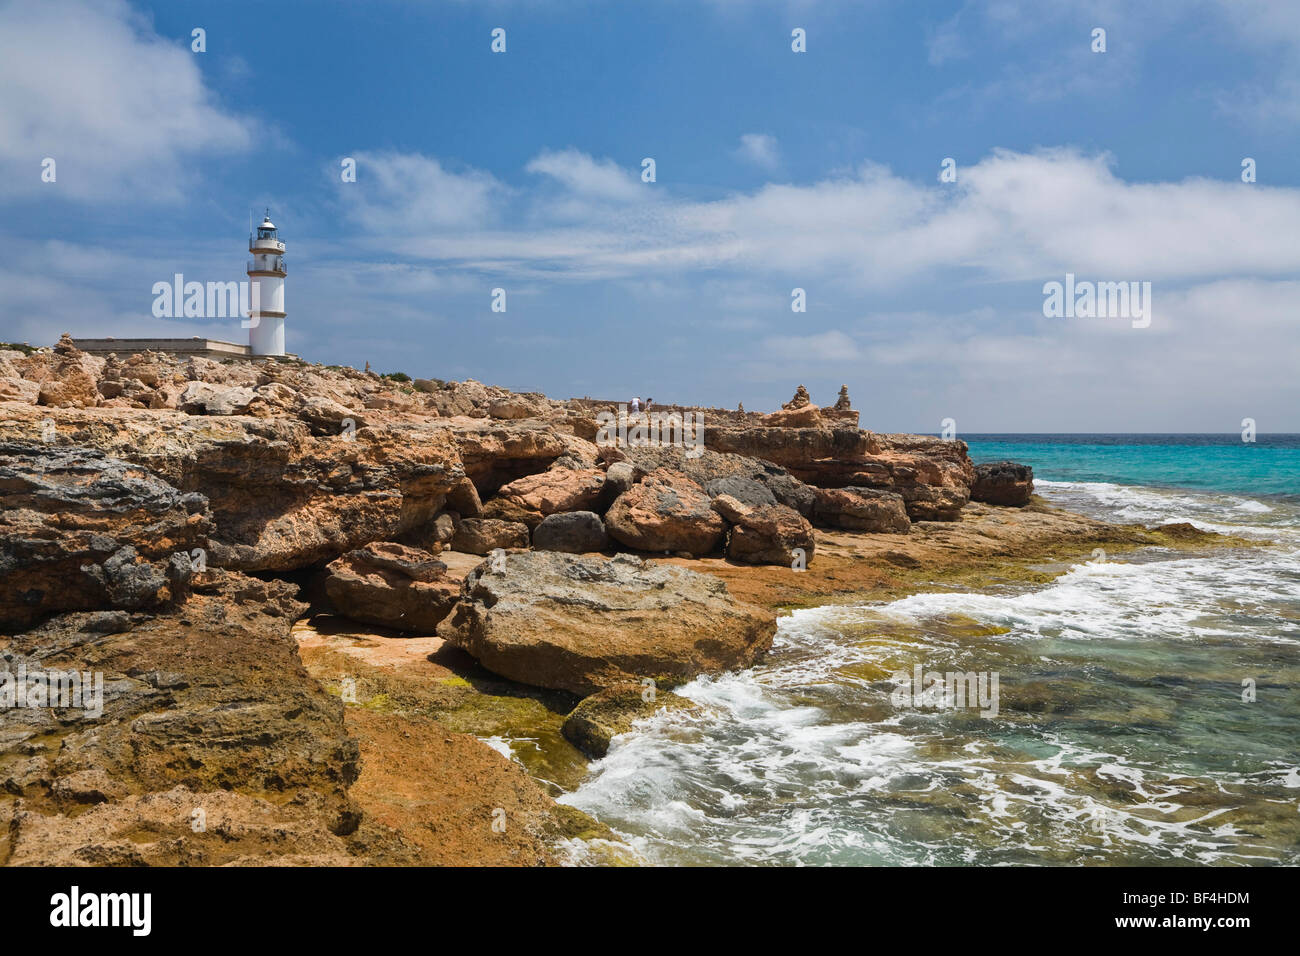 Lighthouse at the cape Cap de ses Salines, Mallorca, Majorca, Balearic Islands, Mediterranean Sea, Spain, Europe Stock Photo